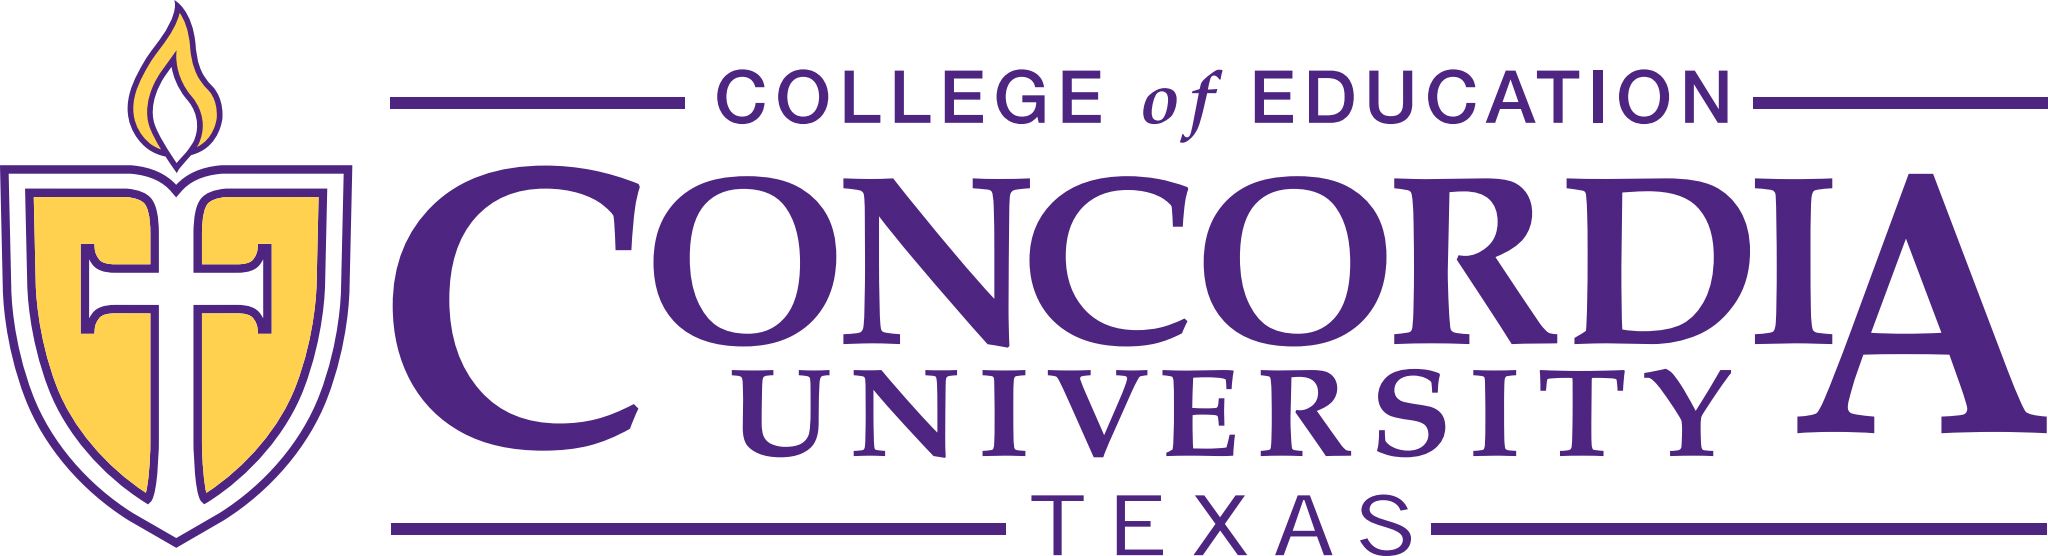 Concordia University Texas College of Education